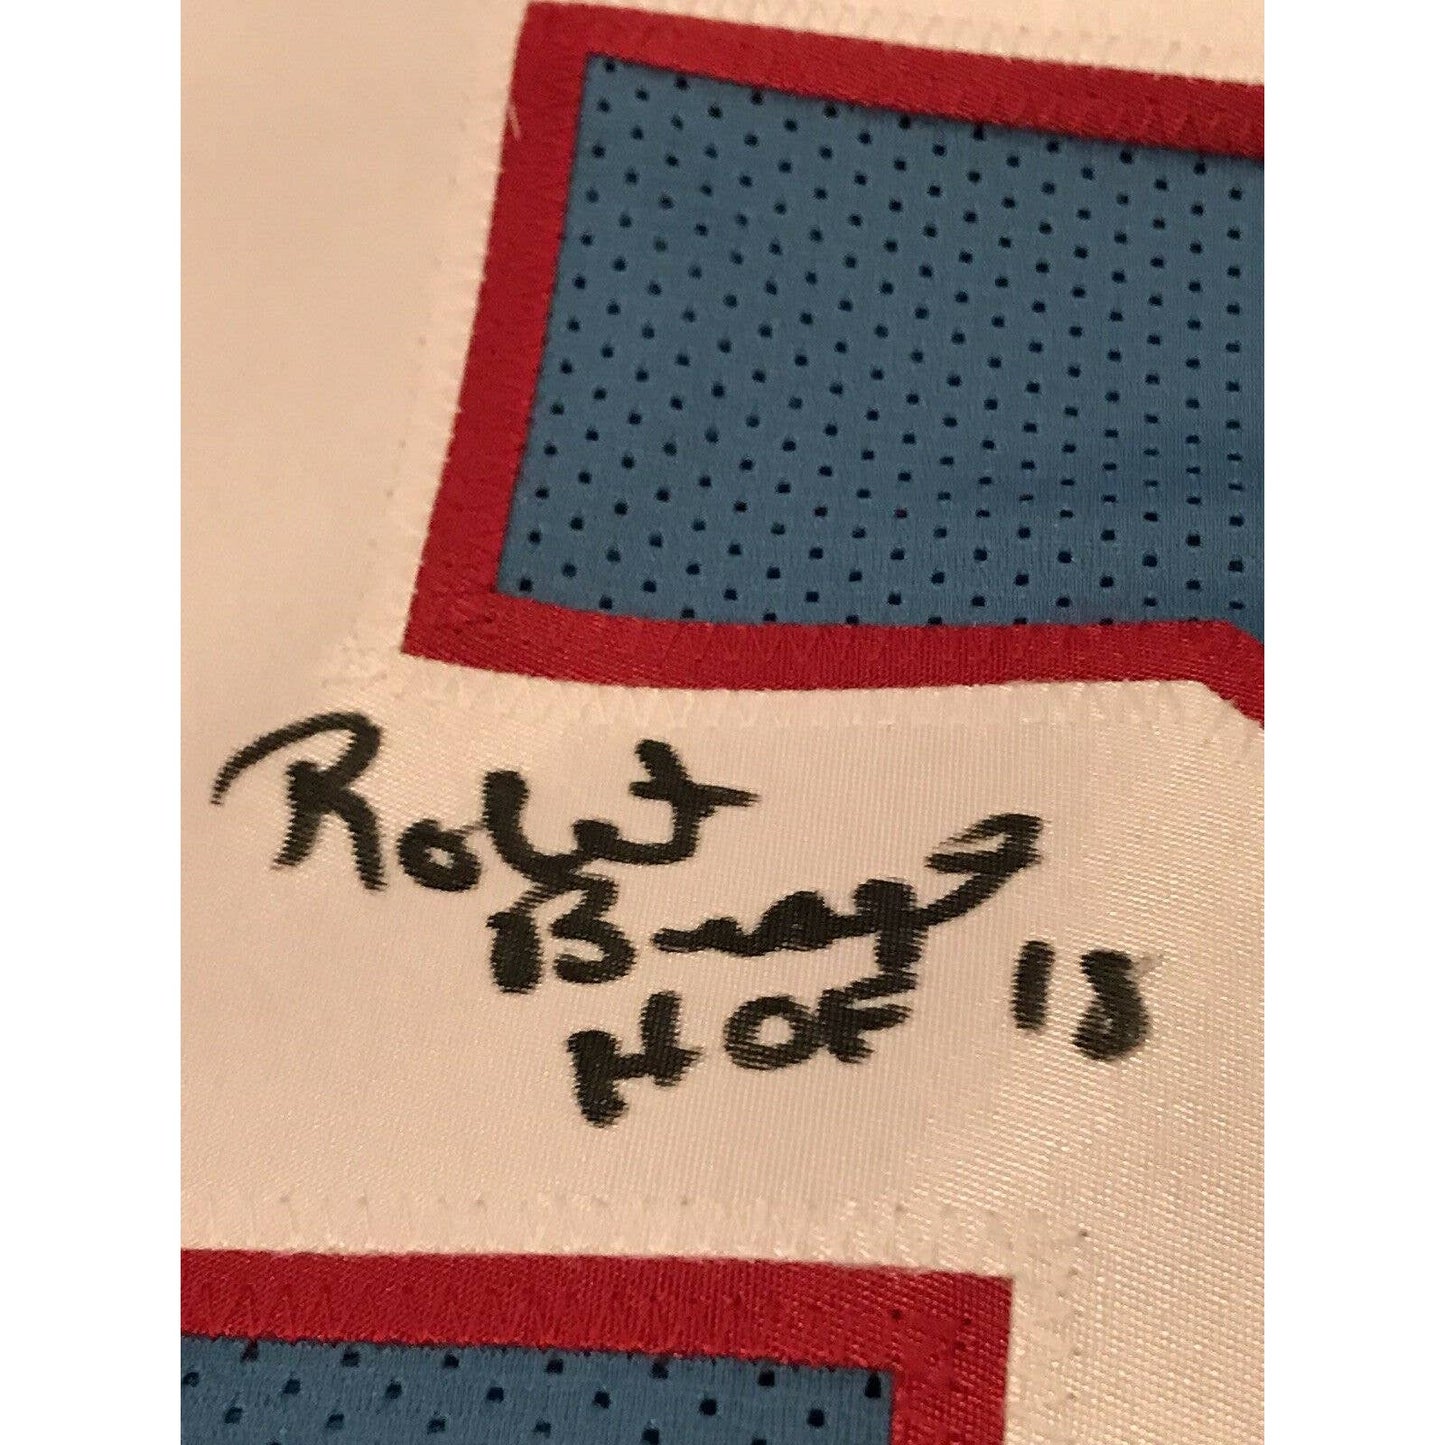 Robert Brazile Autographed/Signed Jersey TRISTAR COA Houston Oilers - TreasuresEvolved